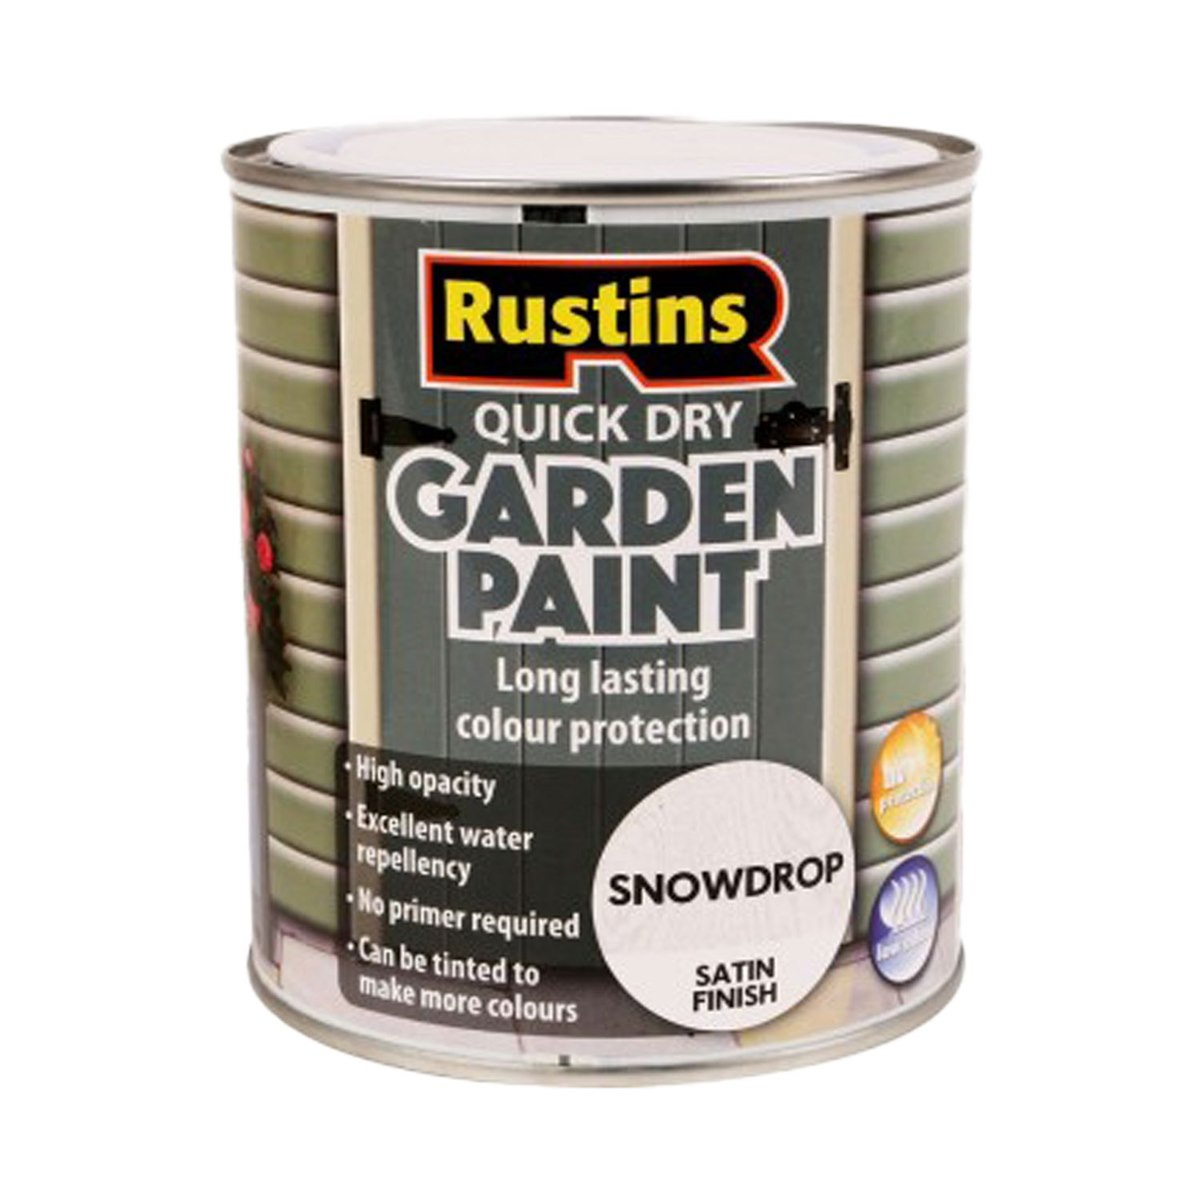 Rustins Quick Dry Garden Paint Satin Finish Snowdrop